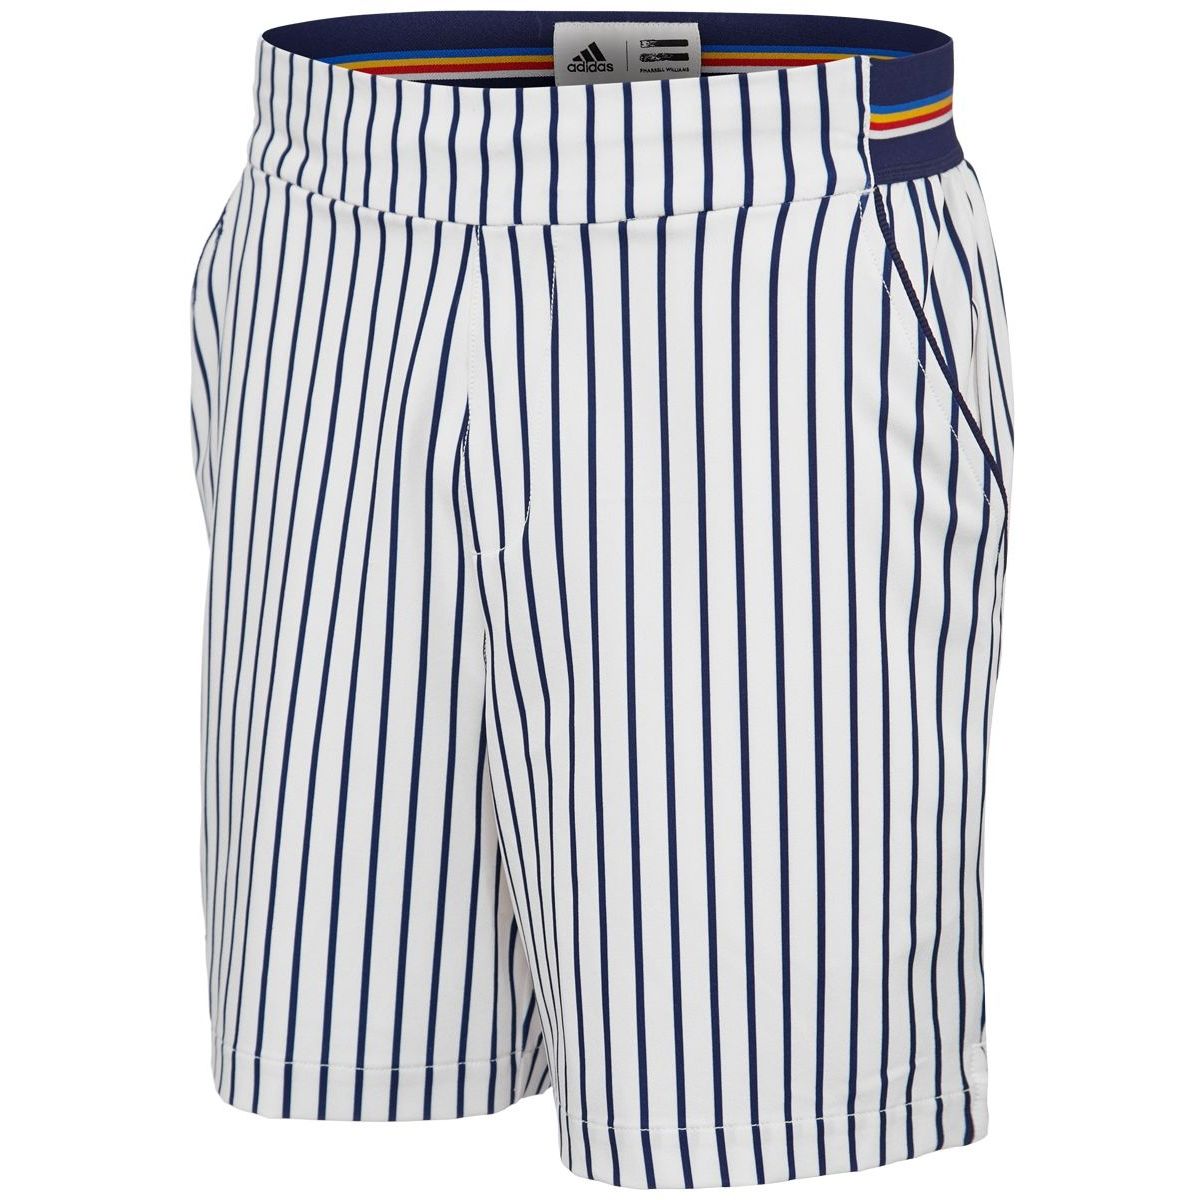 adidas New York Striped Men's Tennis Shorts BQ9111